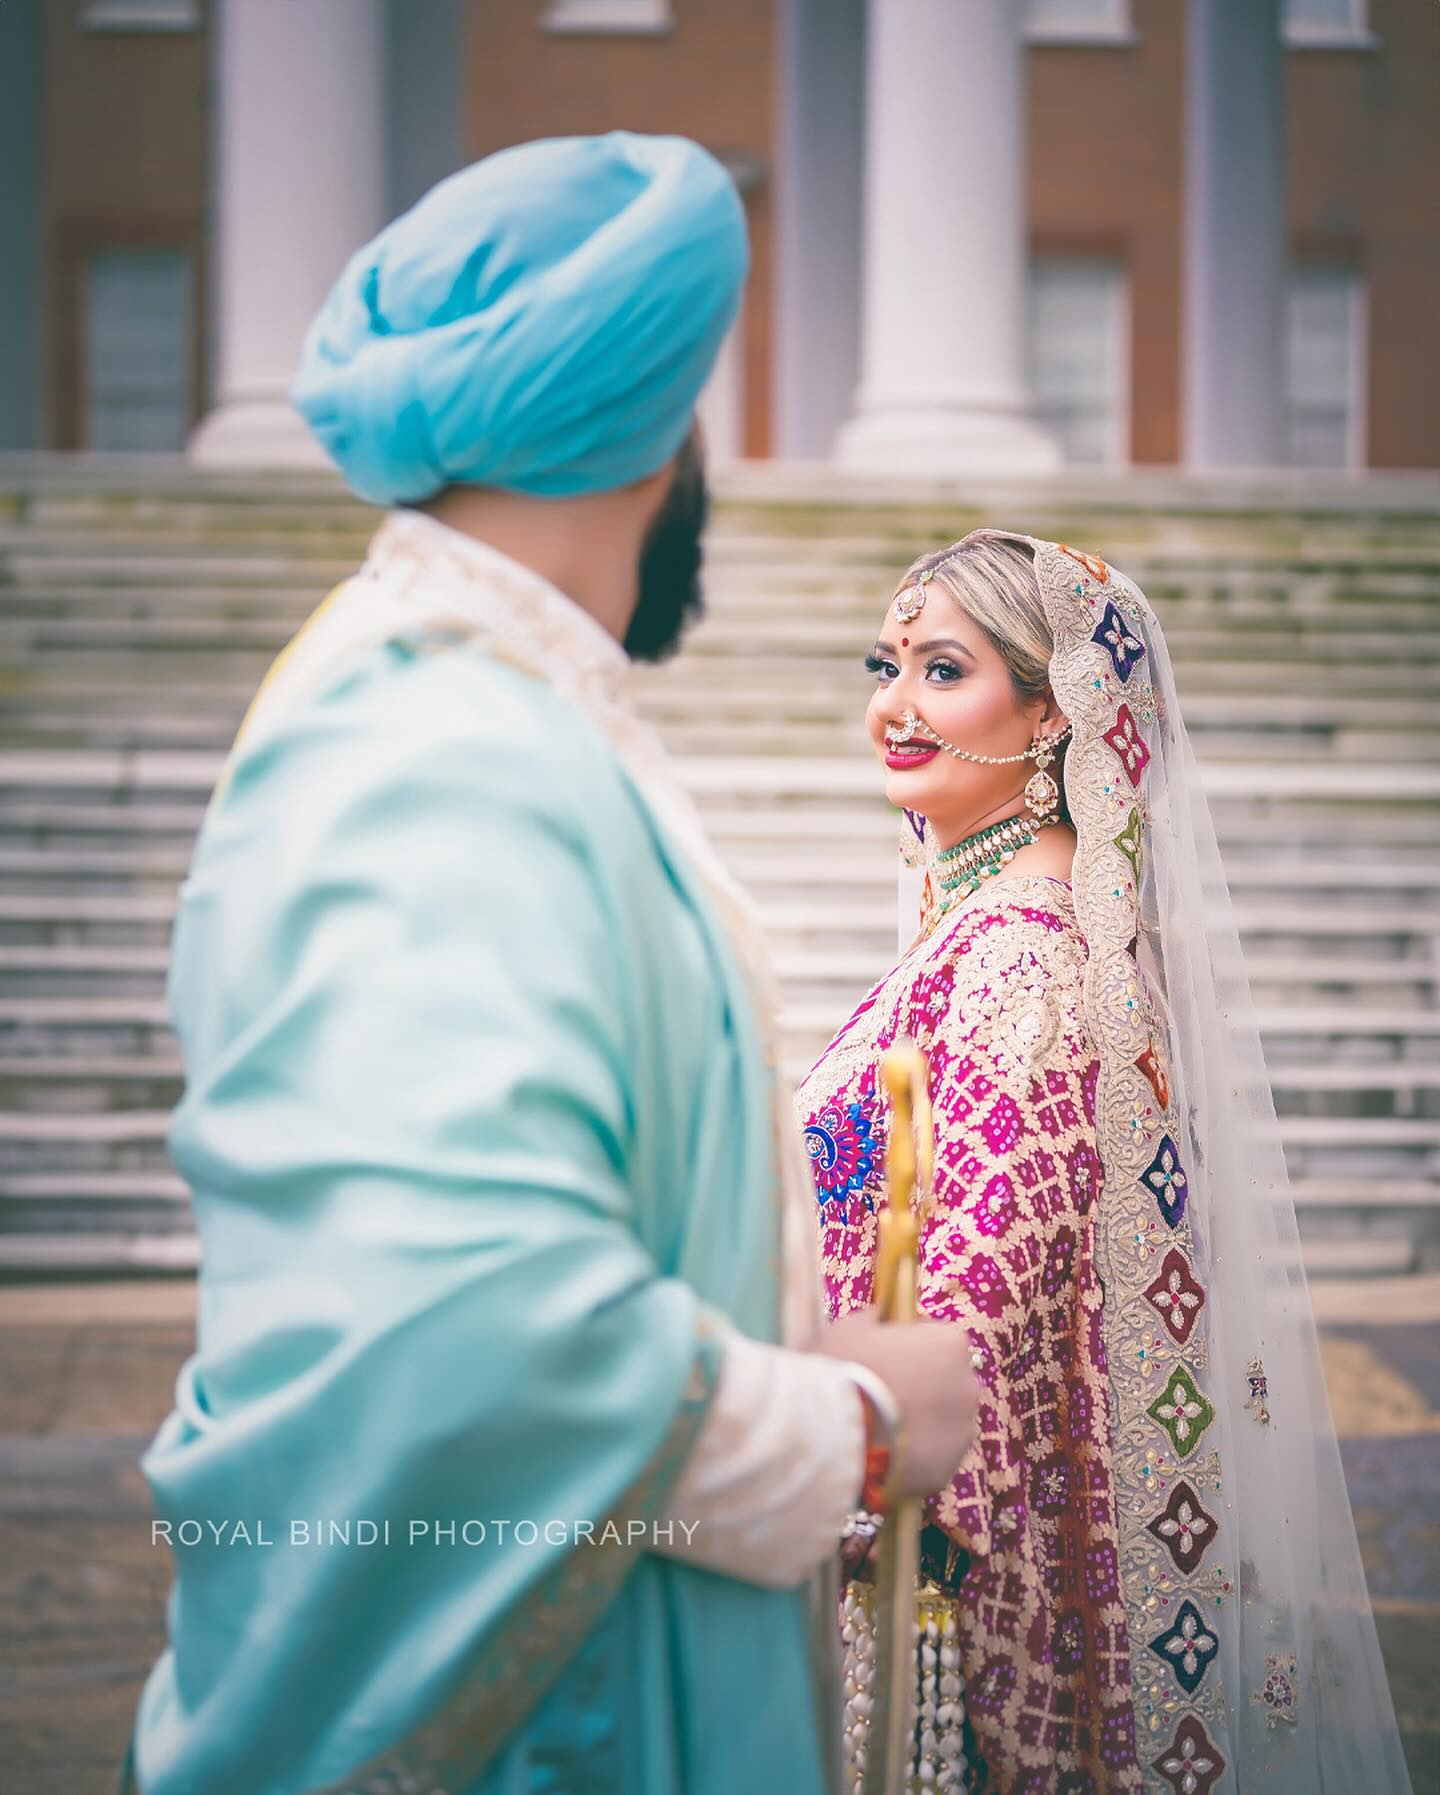 Best Asian wedding photography by Royal Bindi in London.